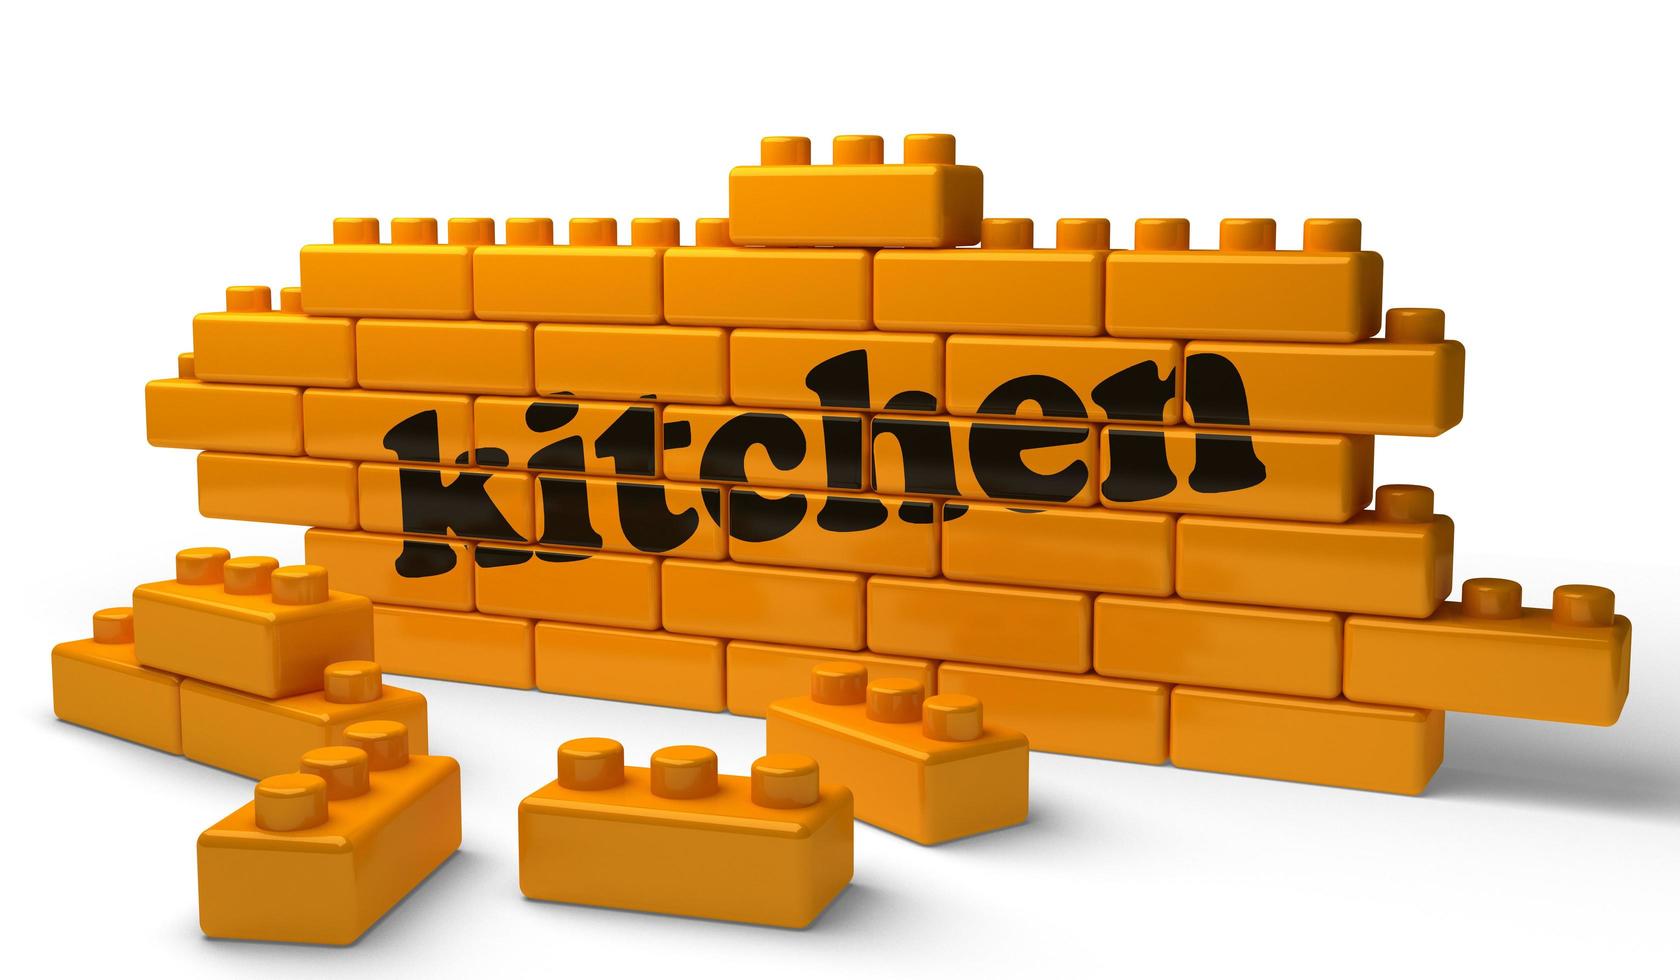 kitchen word on yellow brick wall photo